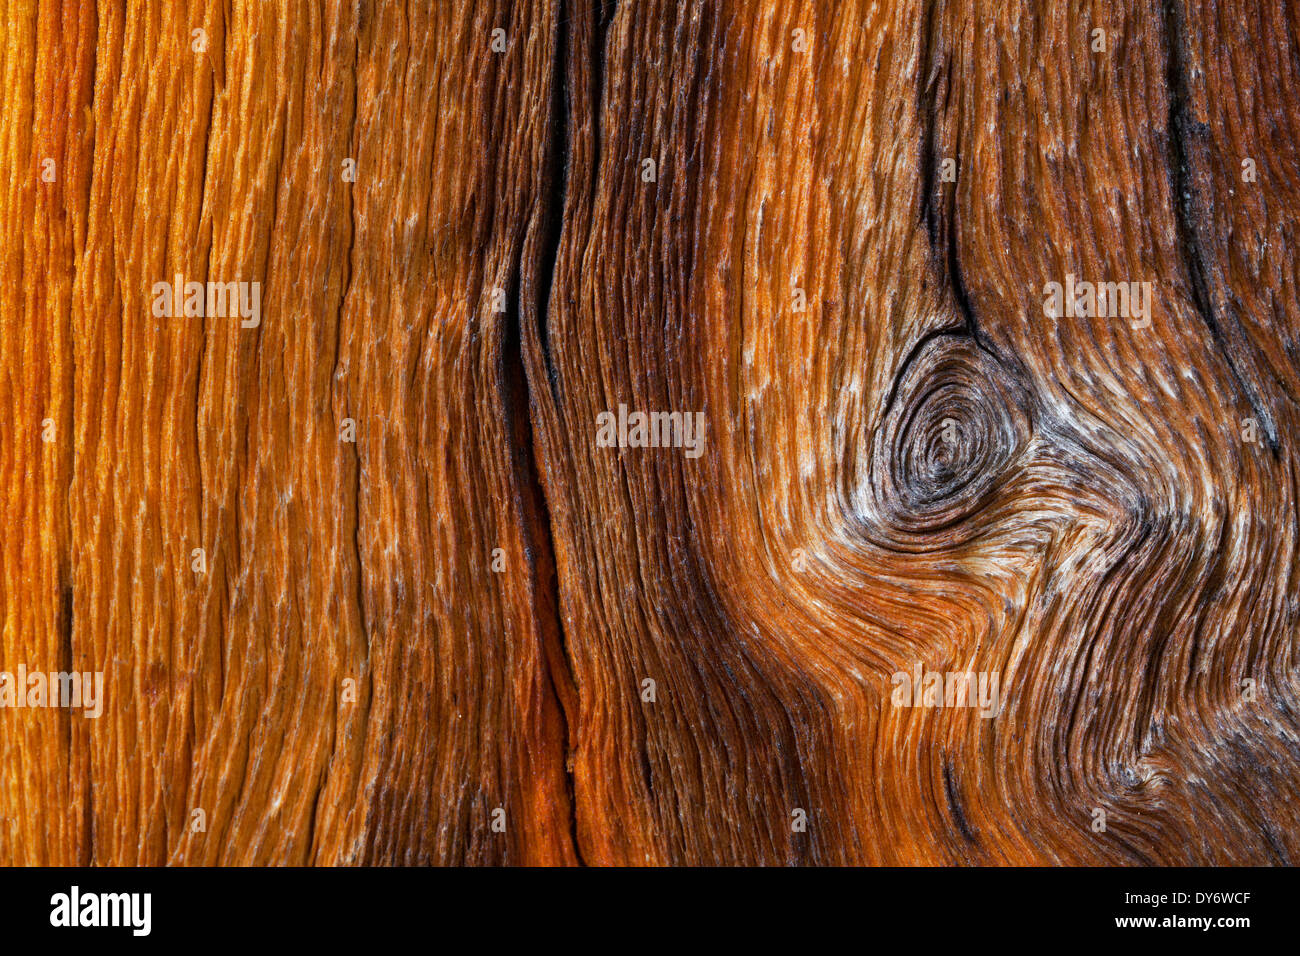 Swiss pine / Swiss stone pine / Arolla pine (Pinus cembra), close up showing wood grain pattern and knot Stock Photo